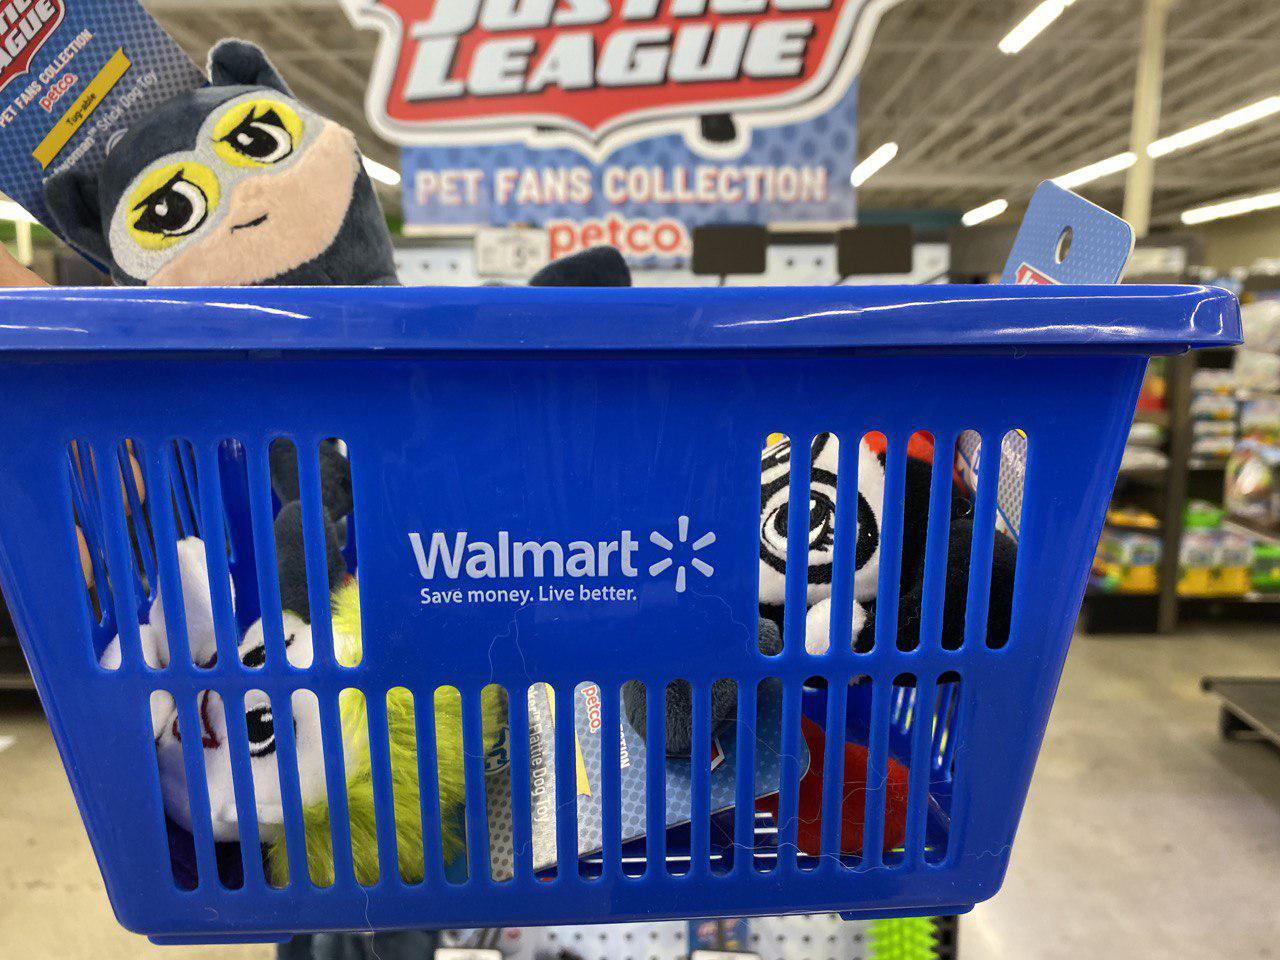 Walmart is the New Petco